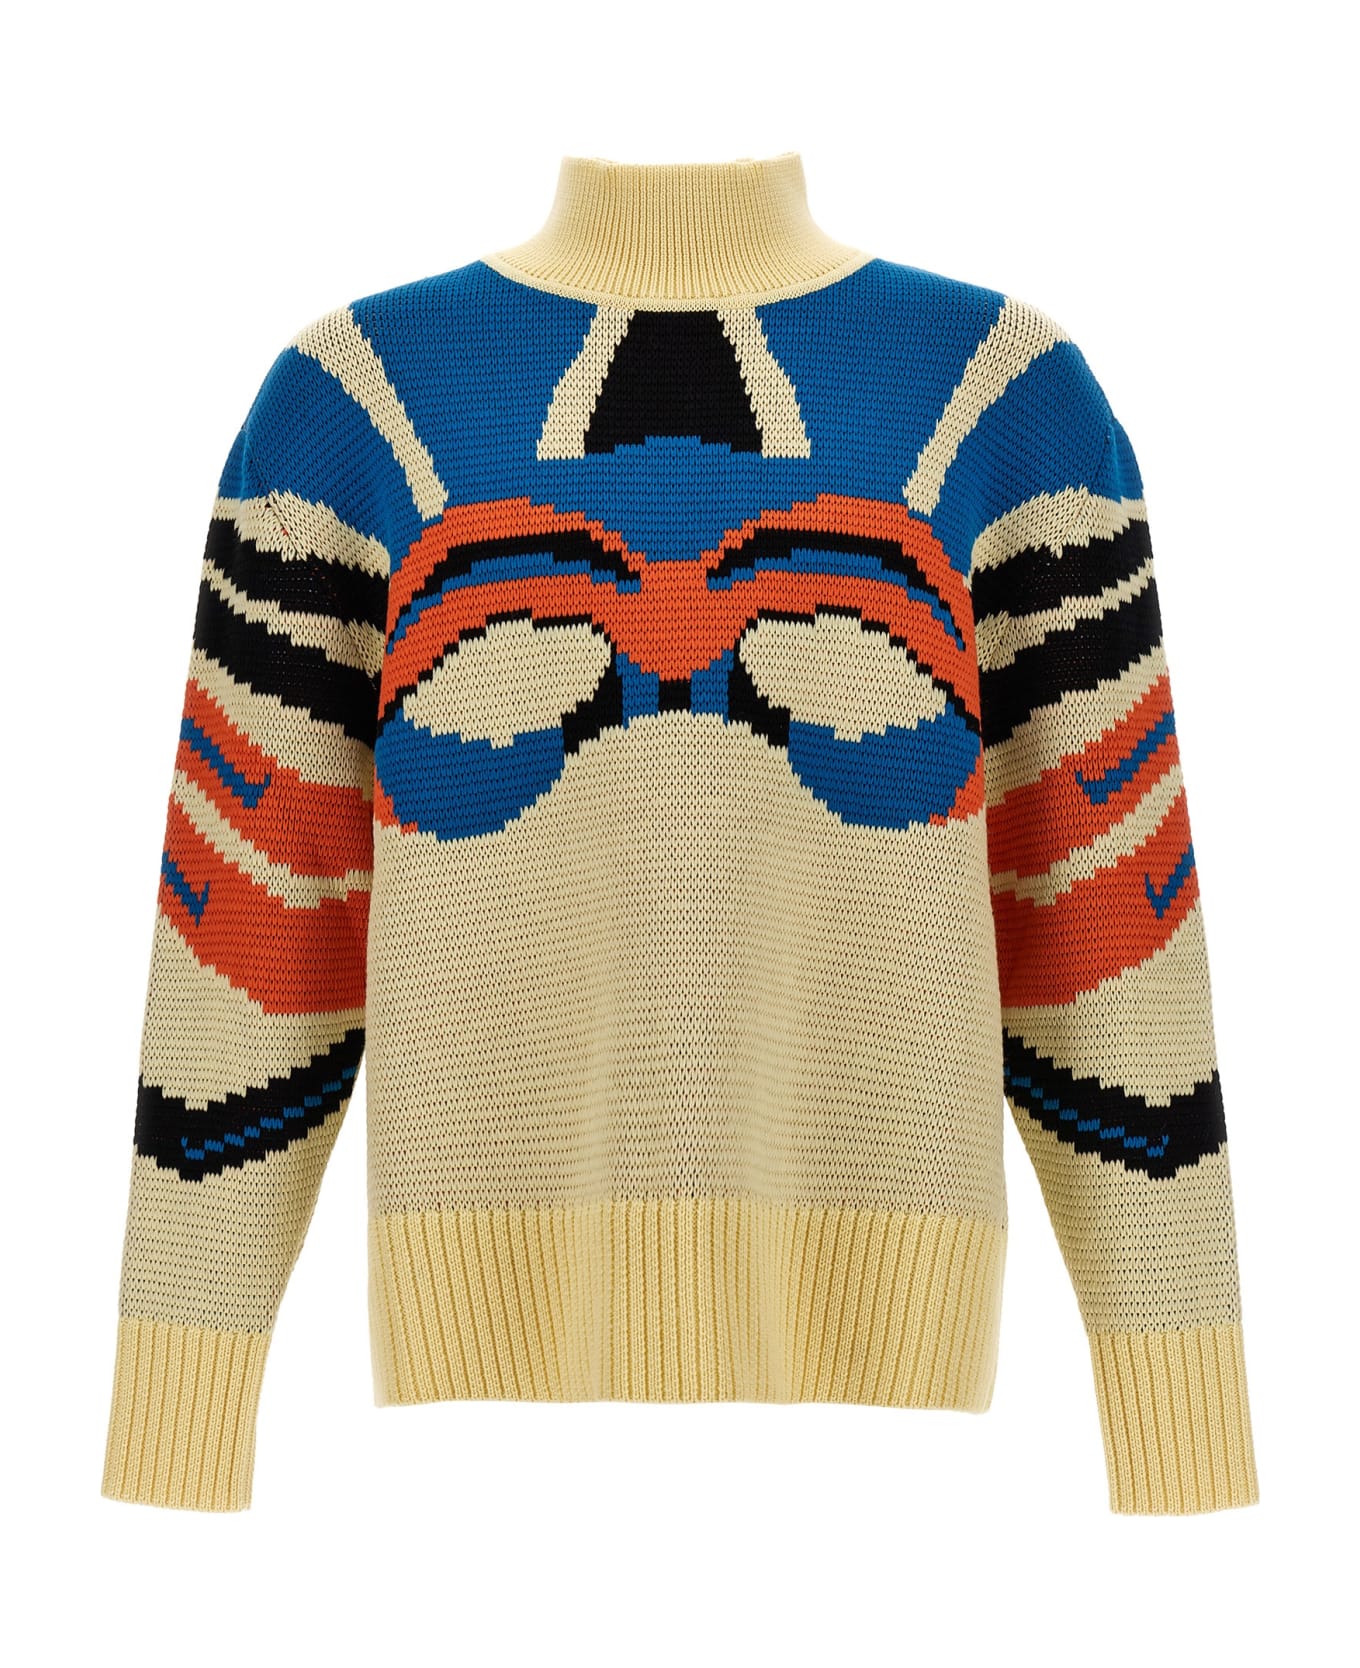 Bluemarble Jacquard Sweater - Multicolor